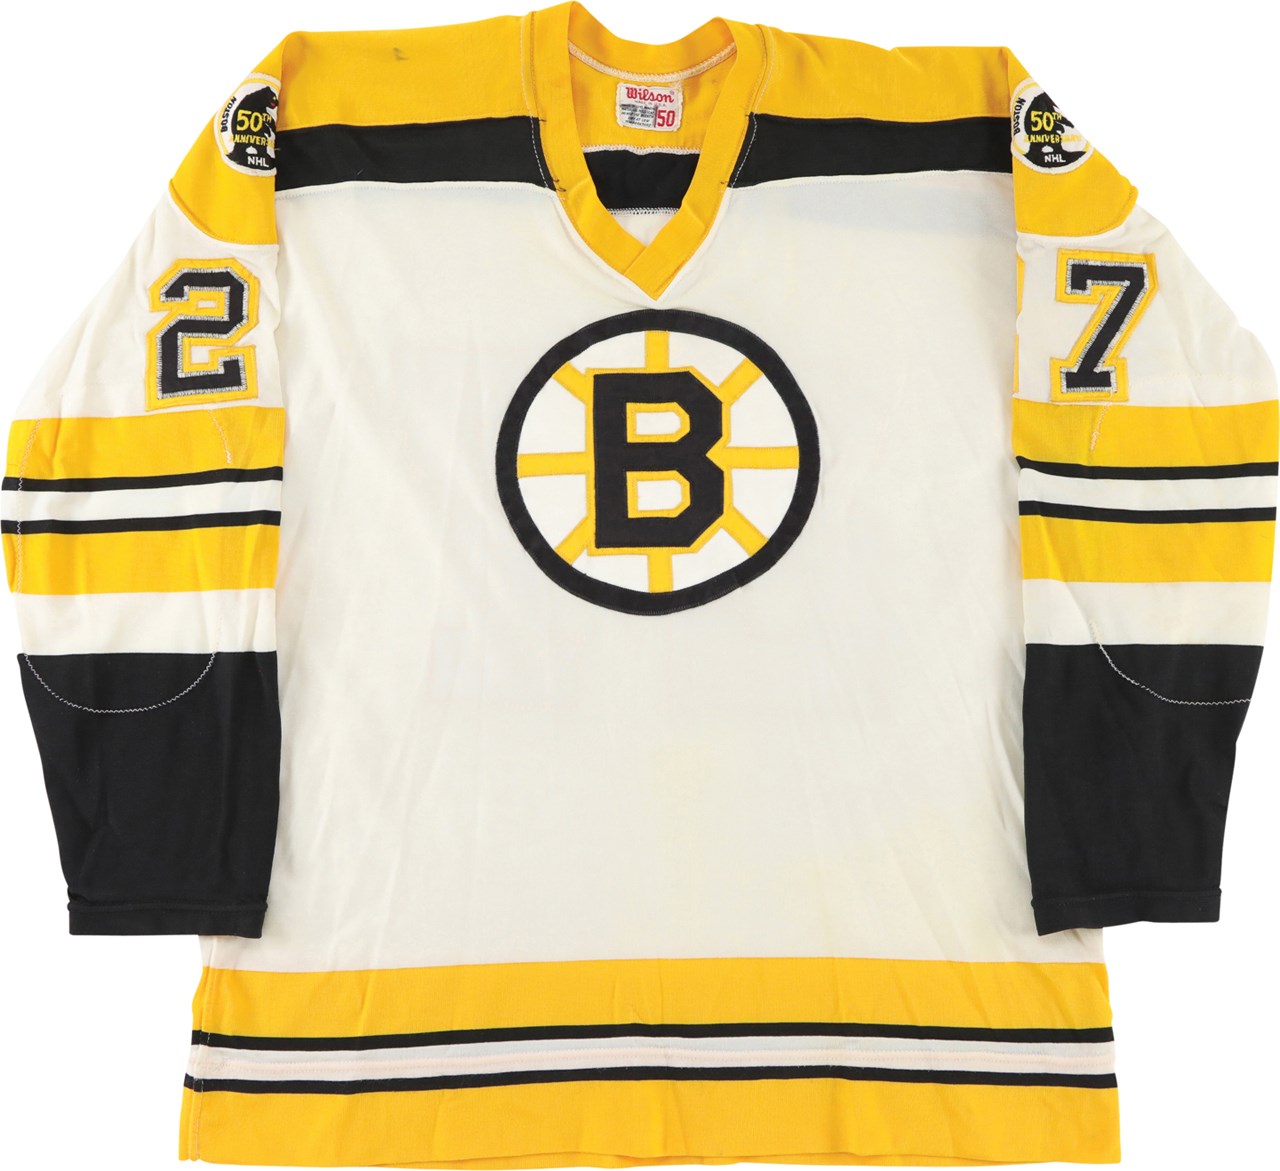 1973-74 Doug Gibson Boston Bruins Game Worn Jersey